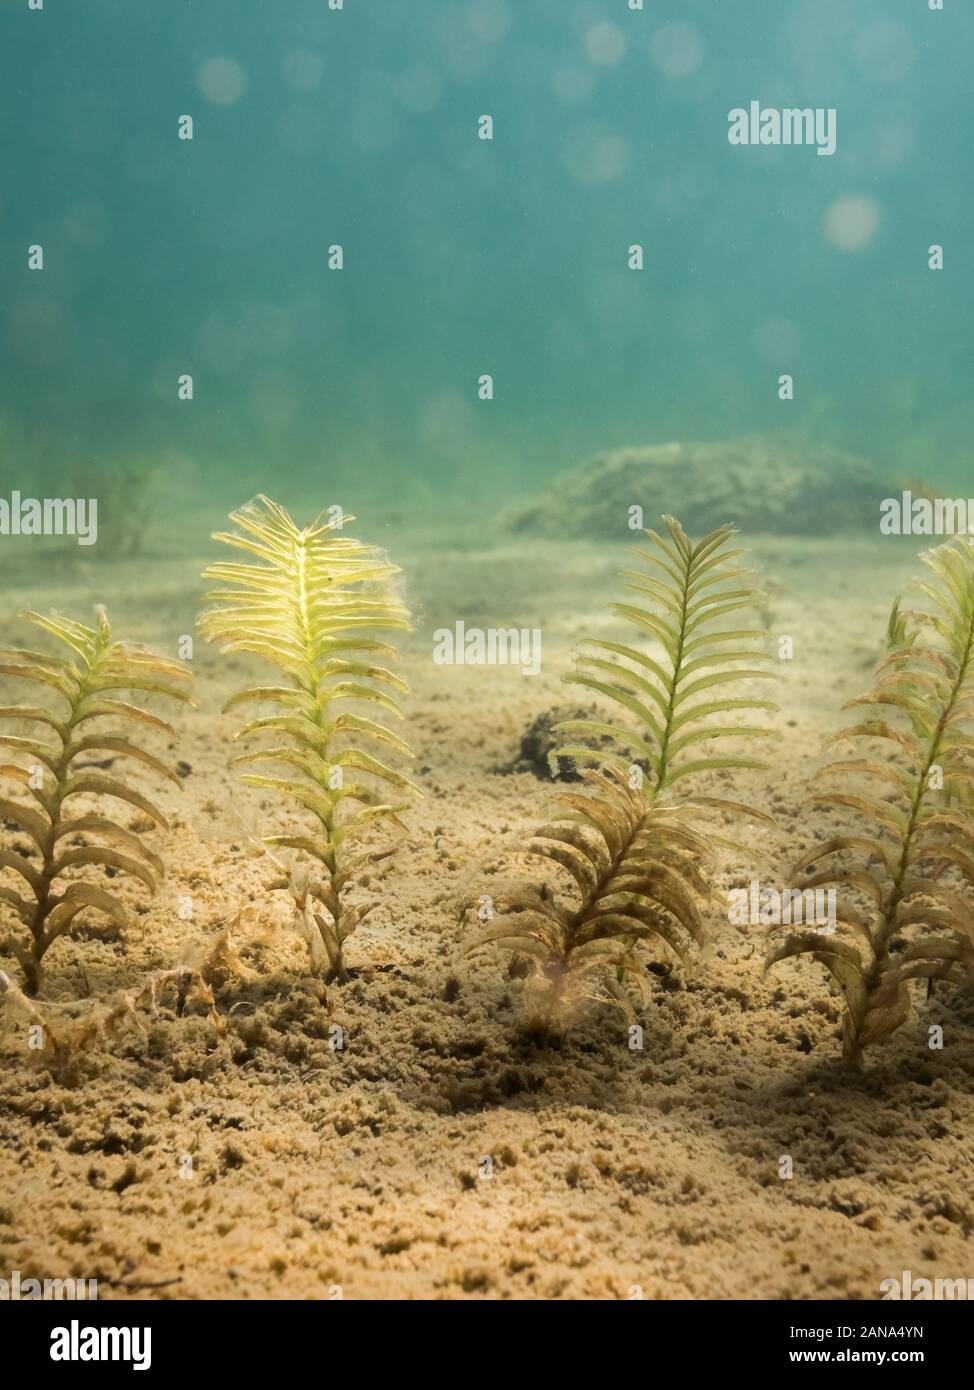 Claspingleaf pondweed (Potamogeton perfoliatus) aquatic plant underwater. Stock Photo